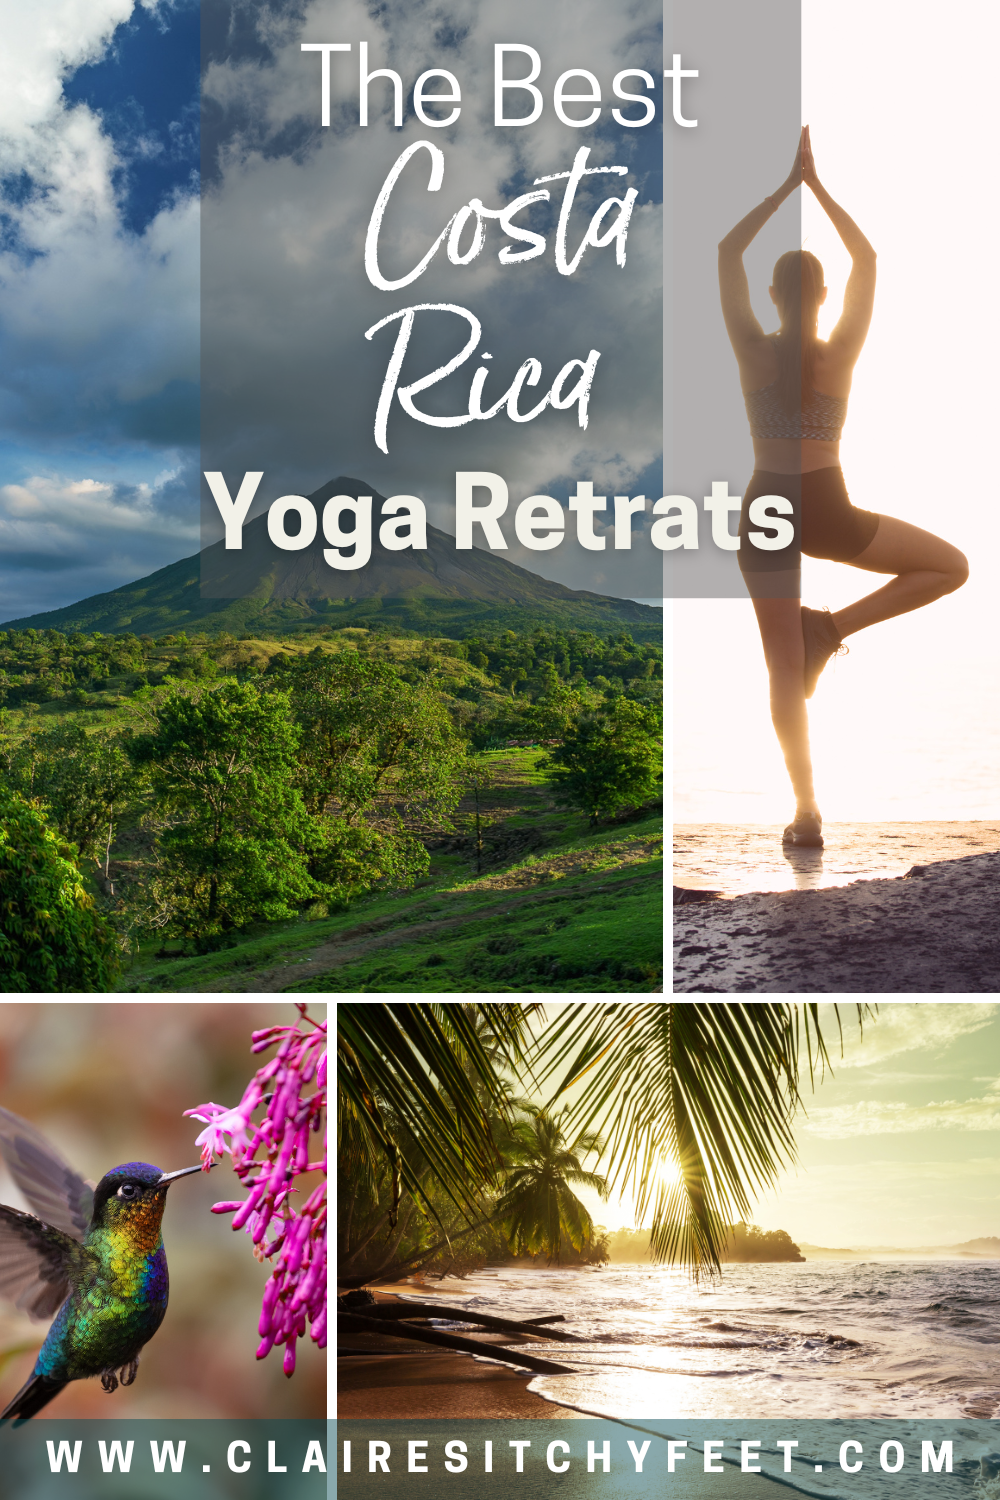 The Best Costa Rica Yoga Retreats